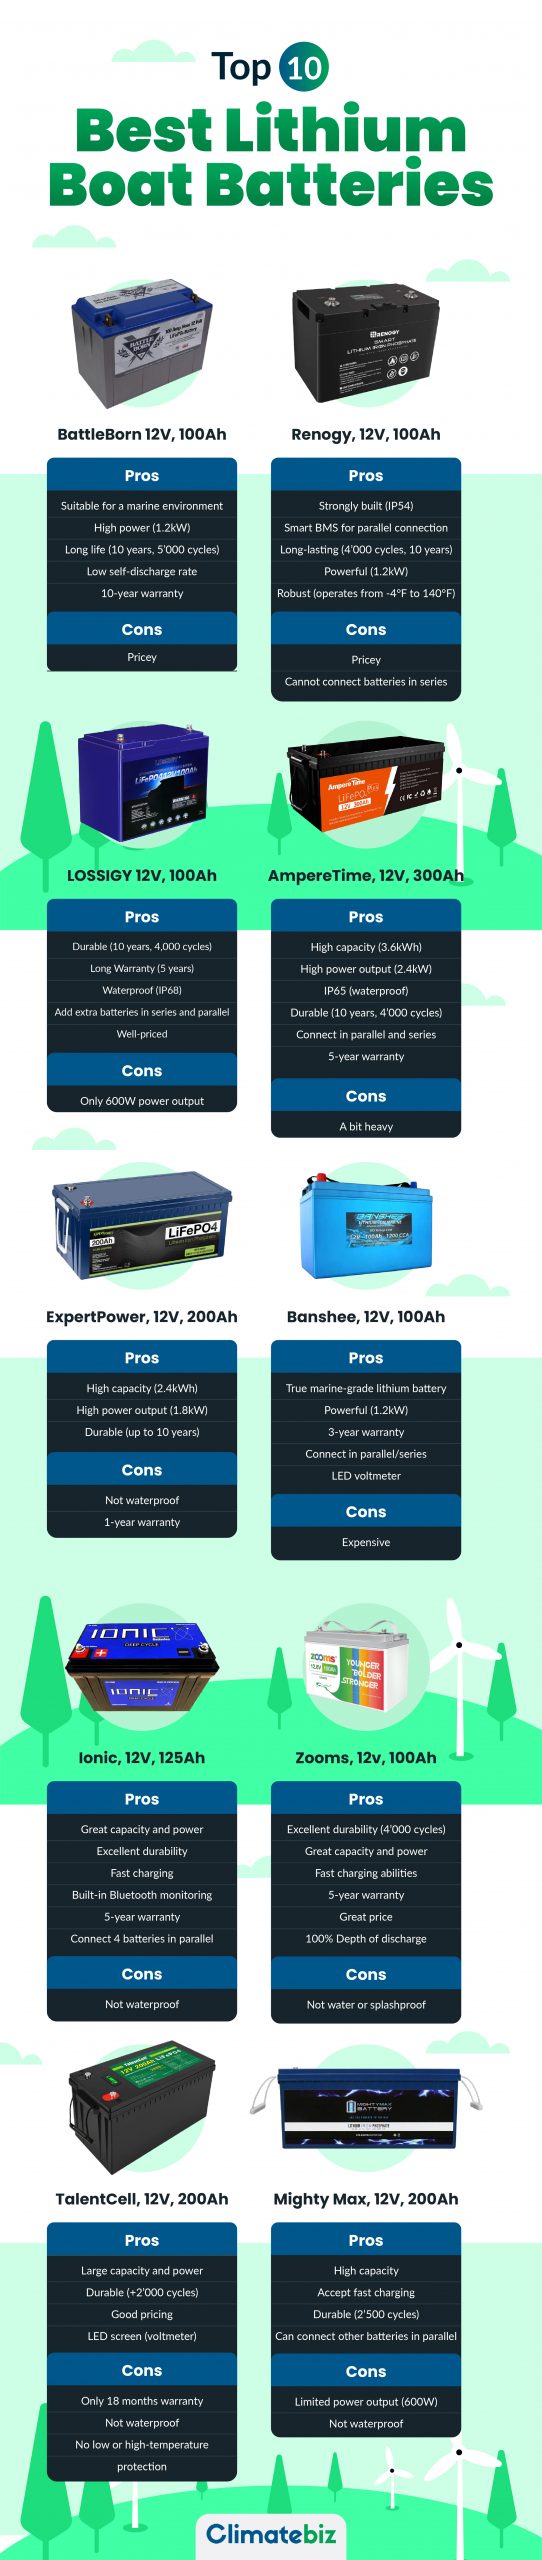 best lithioum boat batteries infographic